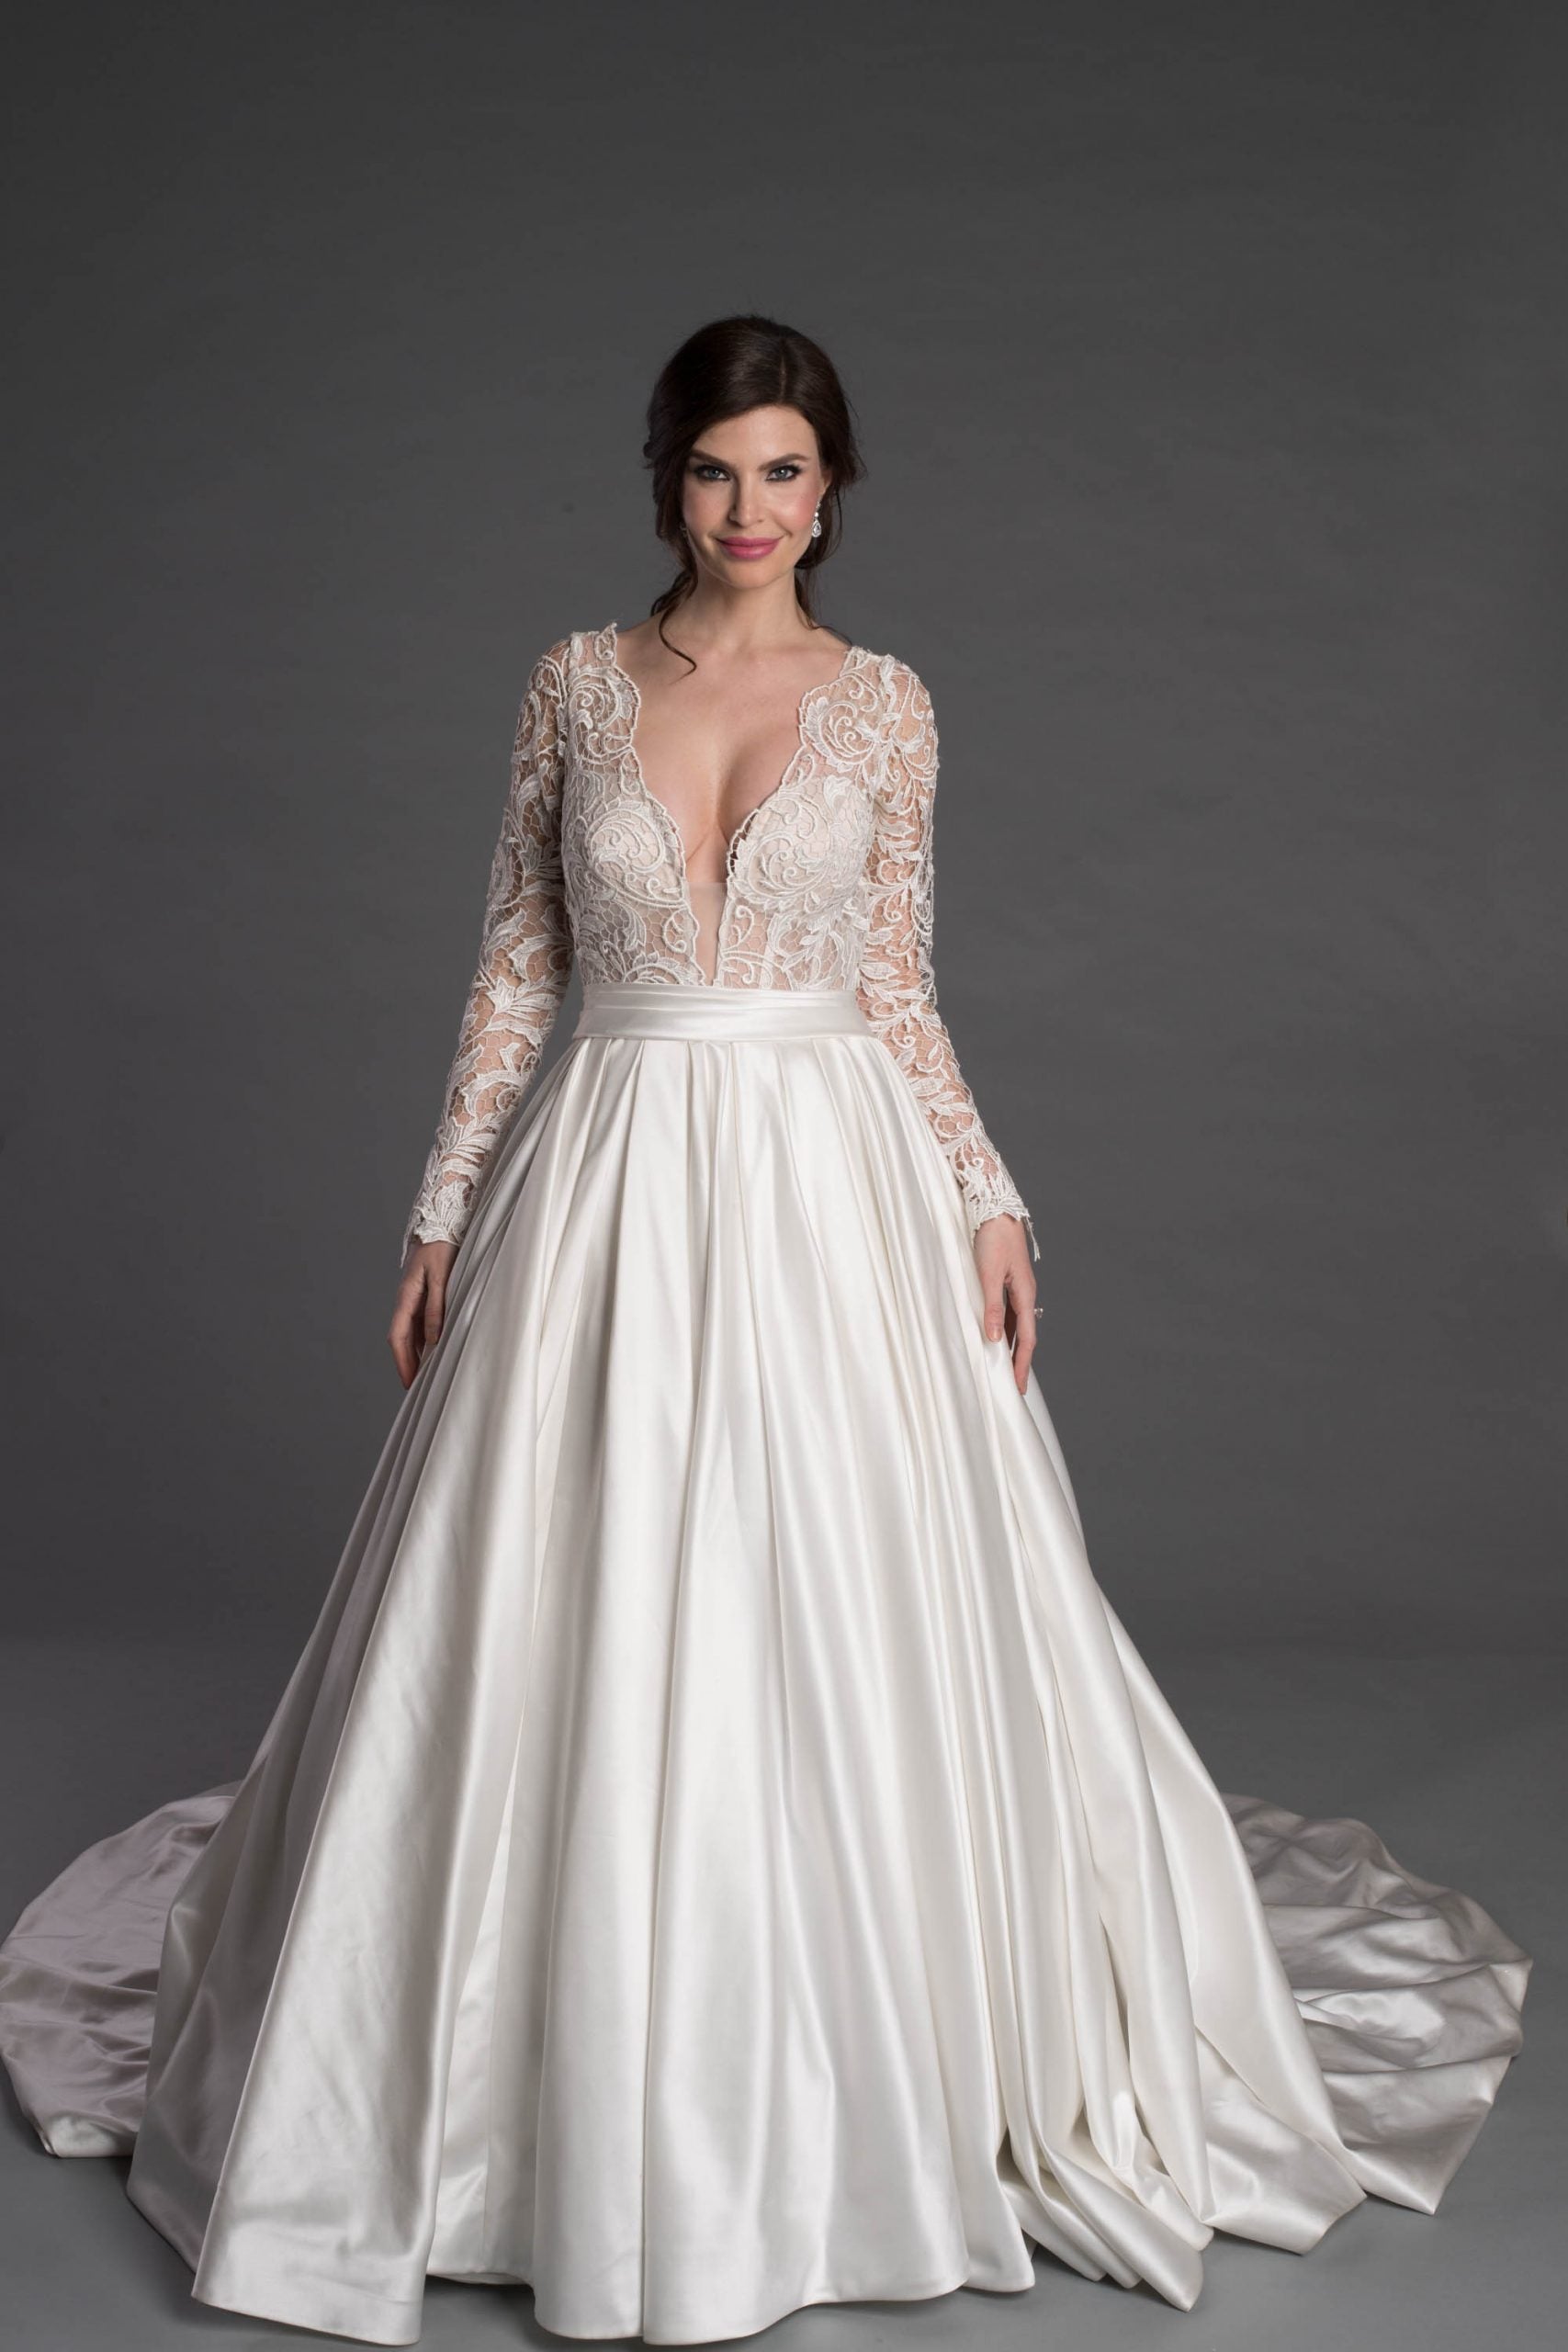 kate middleton bride dress